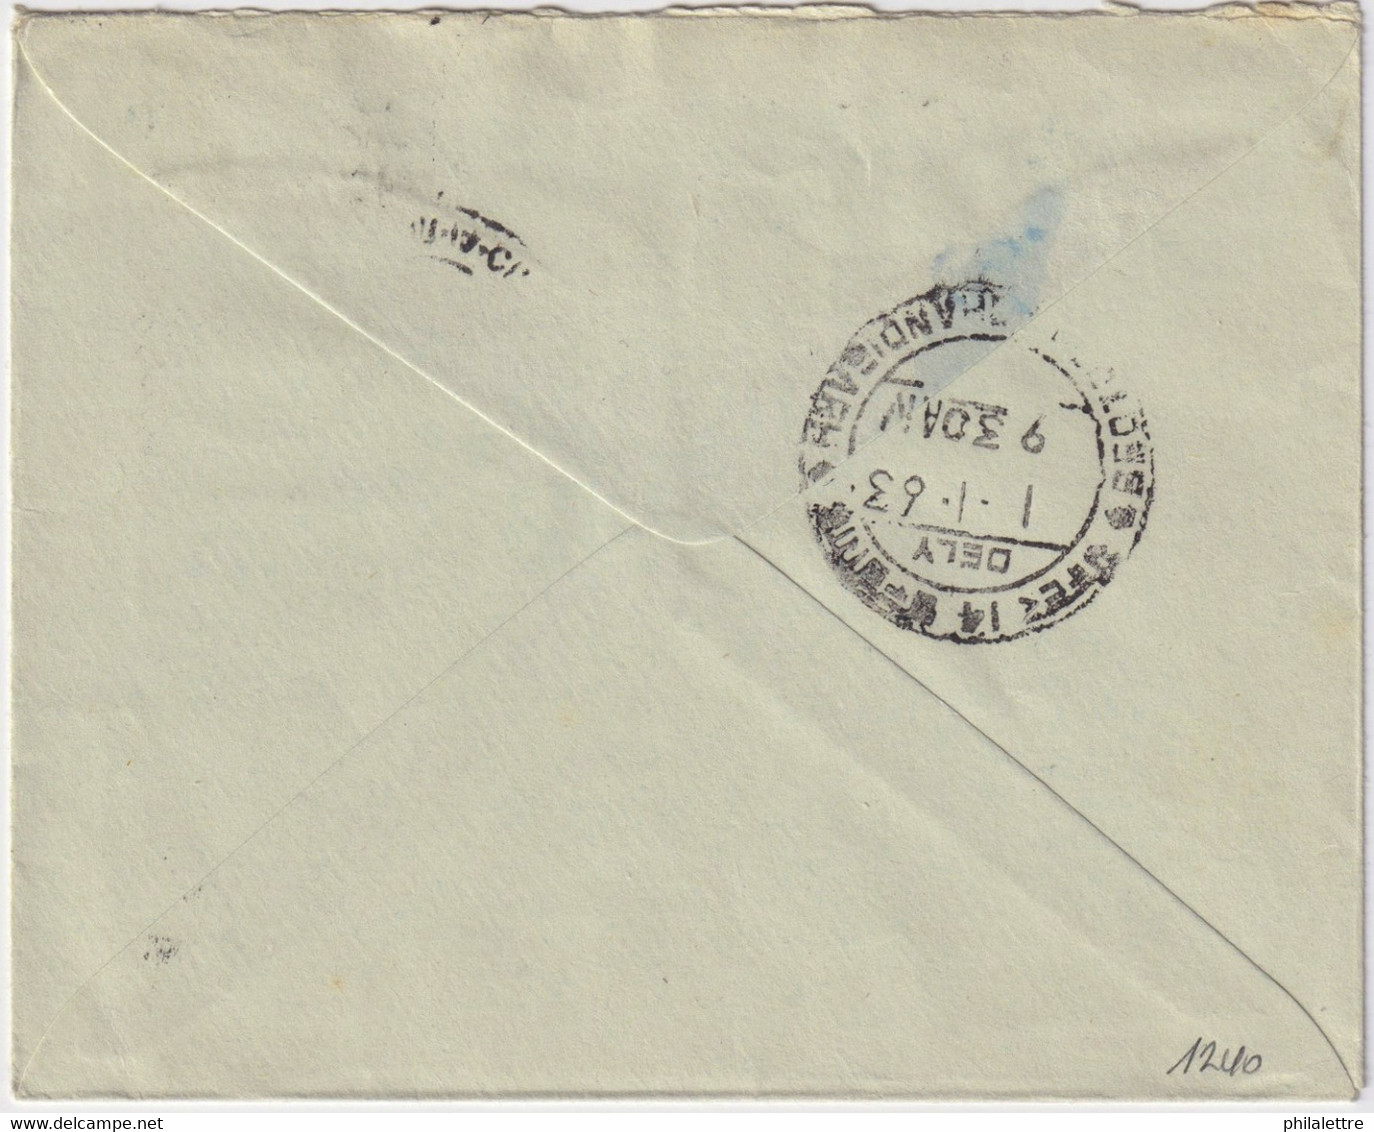 INDE / INDIA - 1962 - Fine Postal Envelope Used Locally In CHANDIGARH - Omslagen